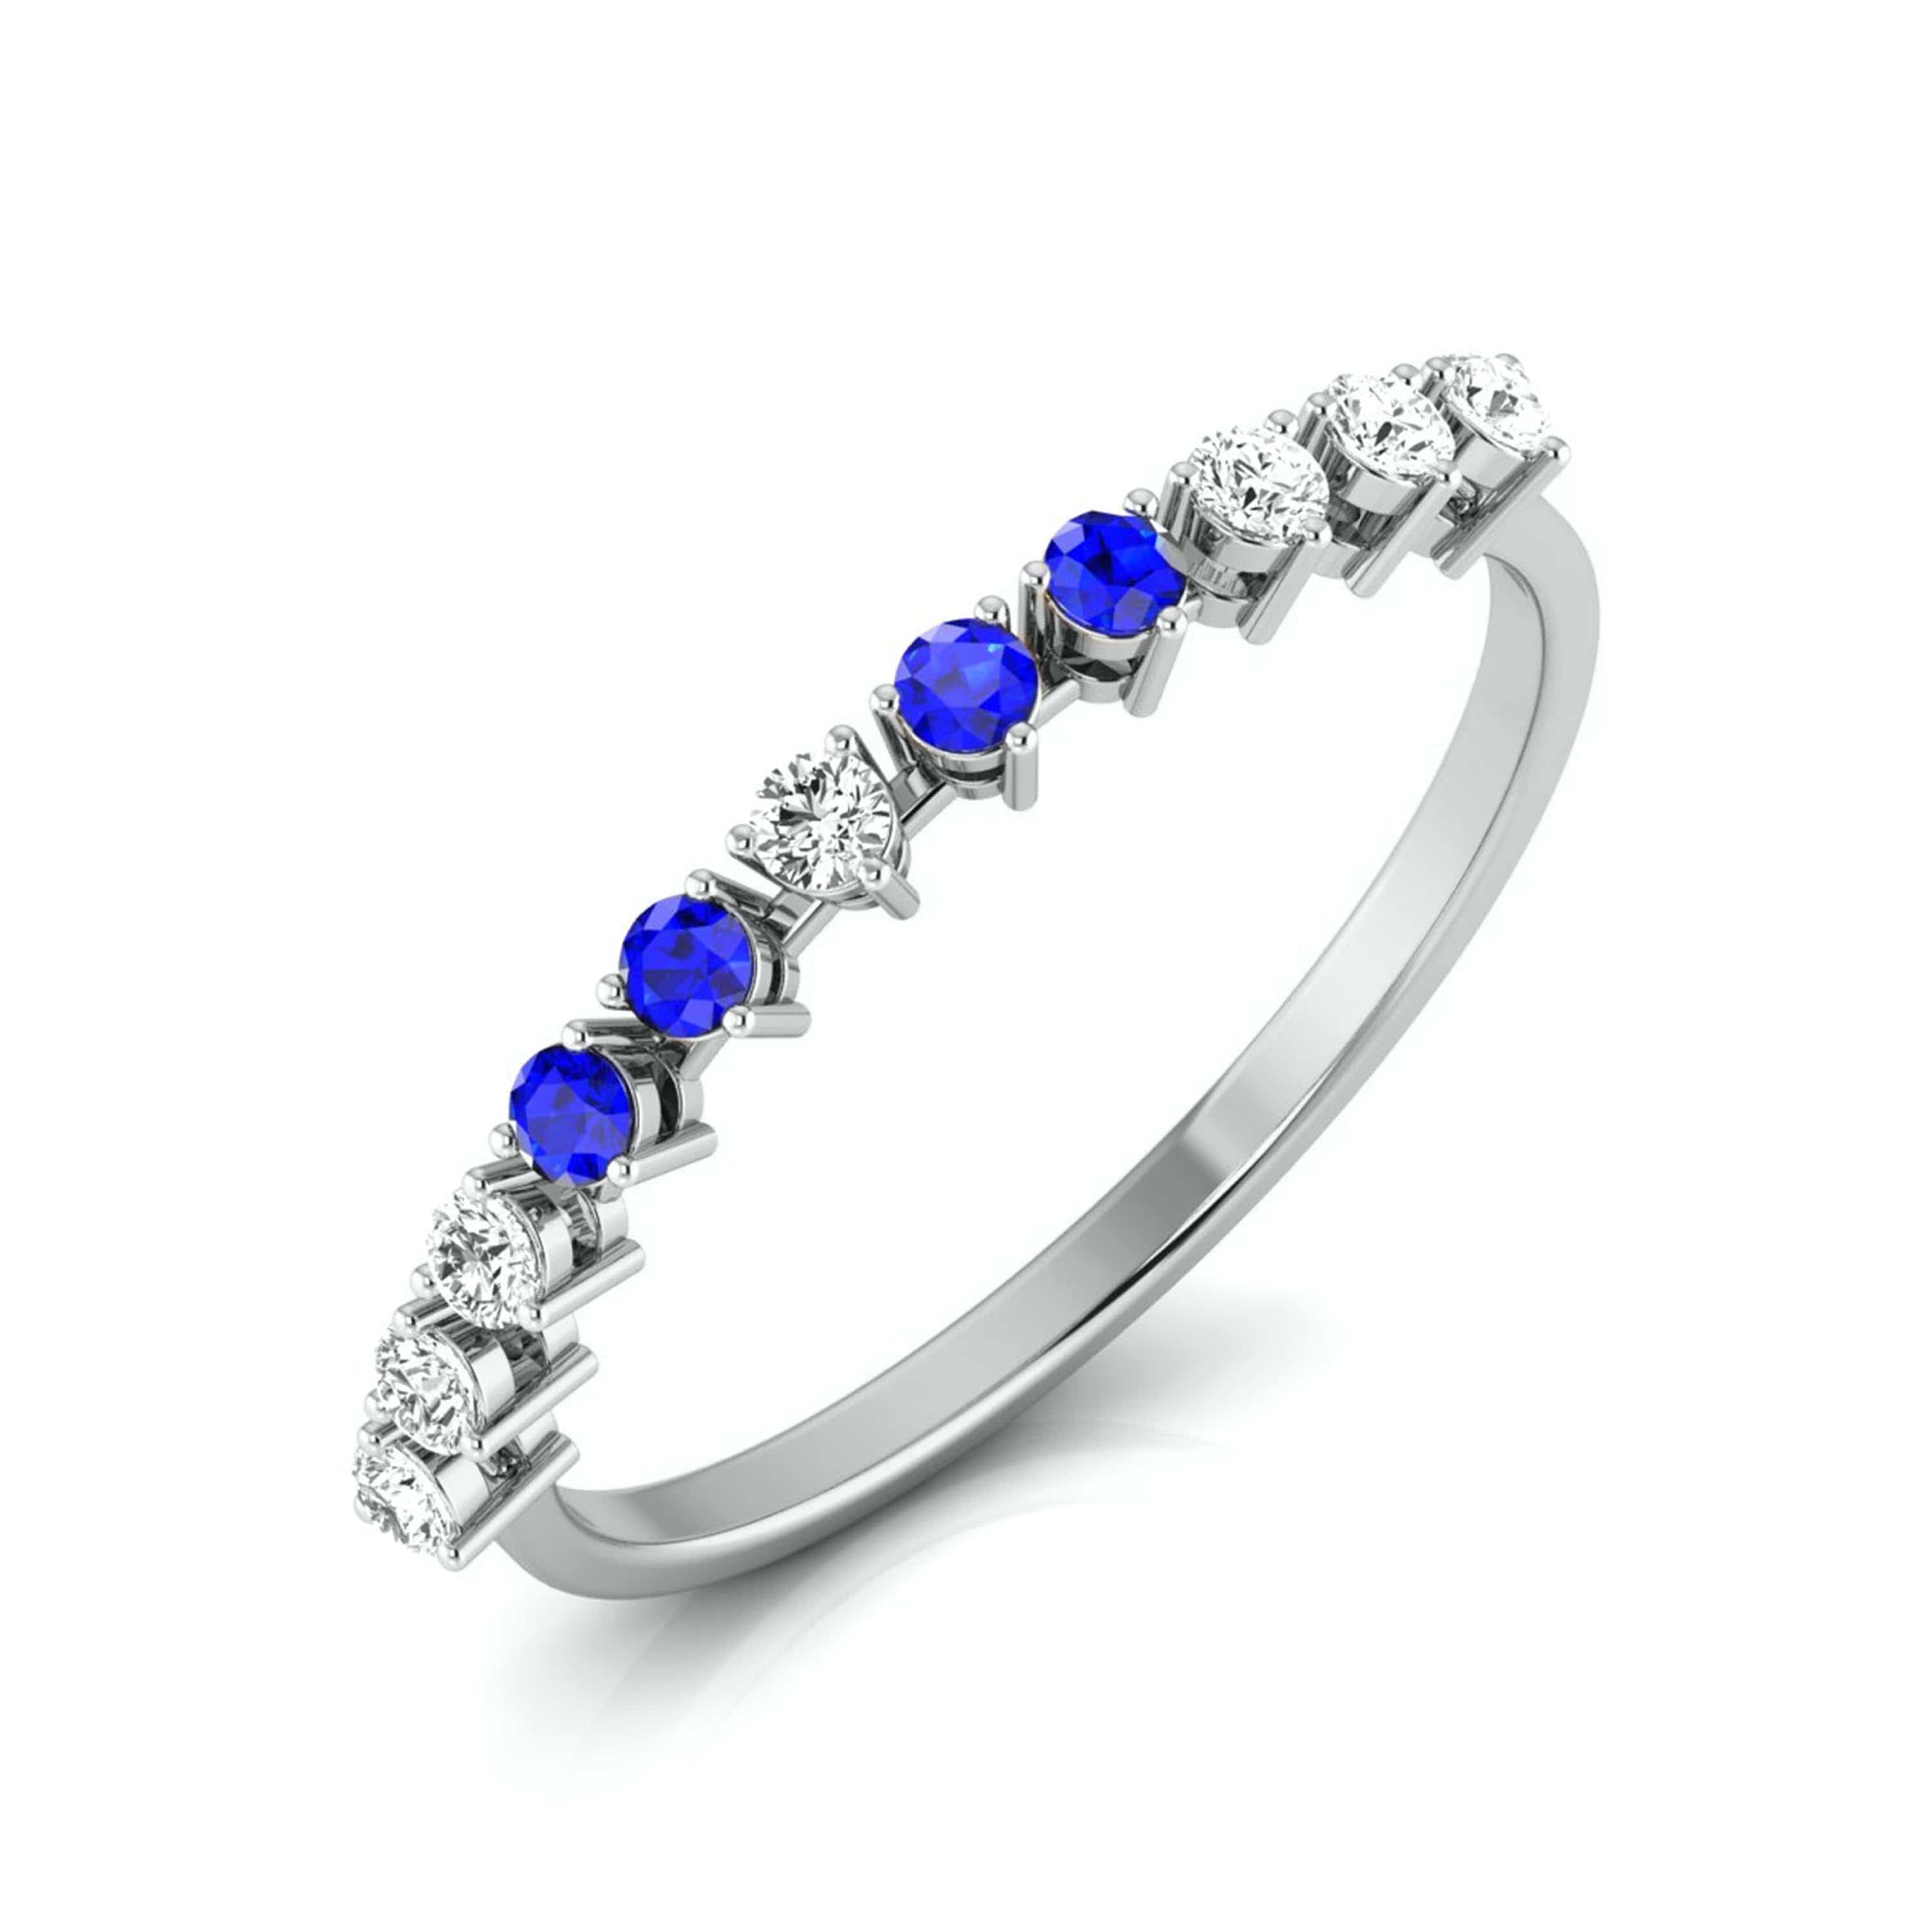 Blue sapphire engagement ring - Monte Cristo